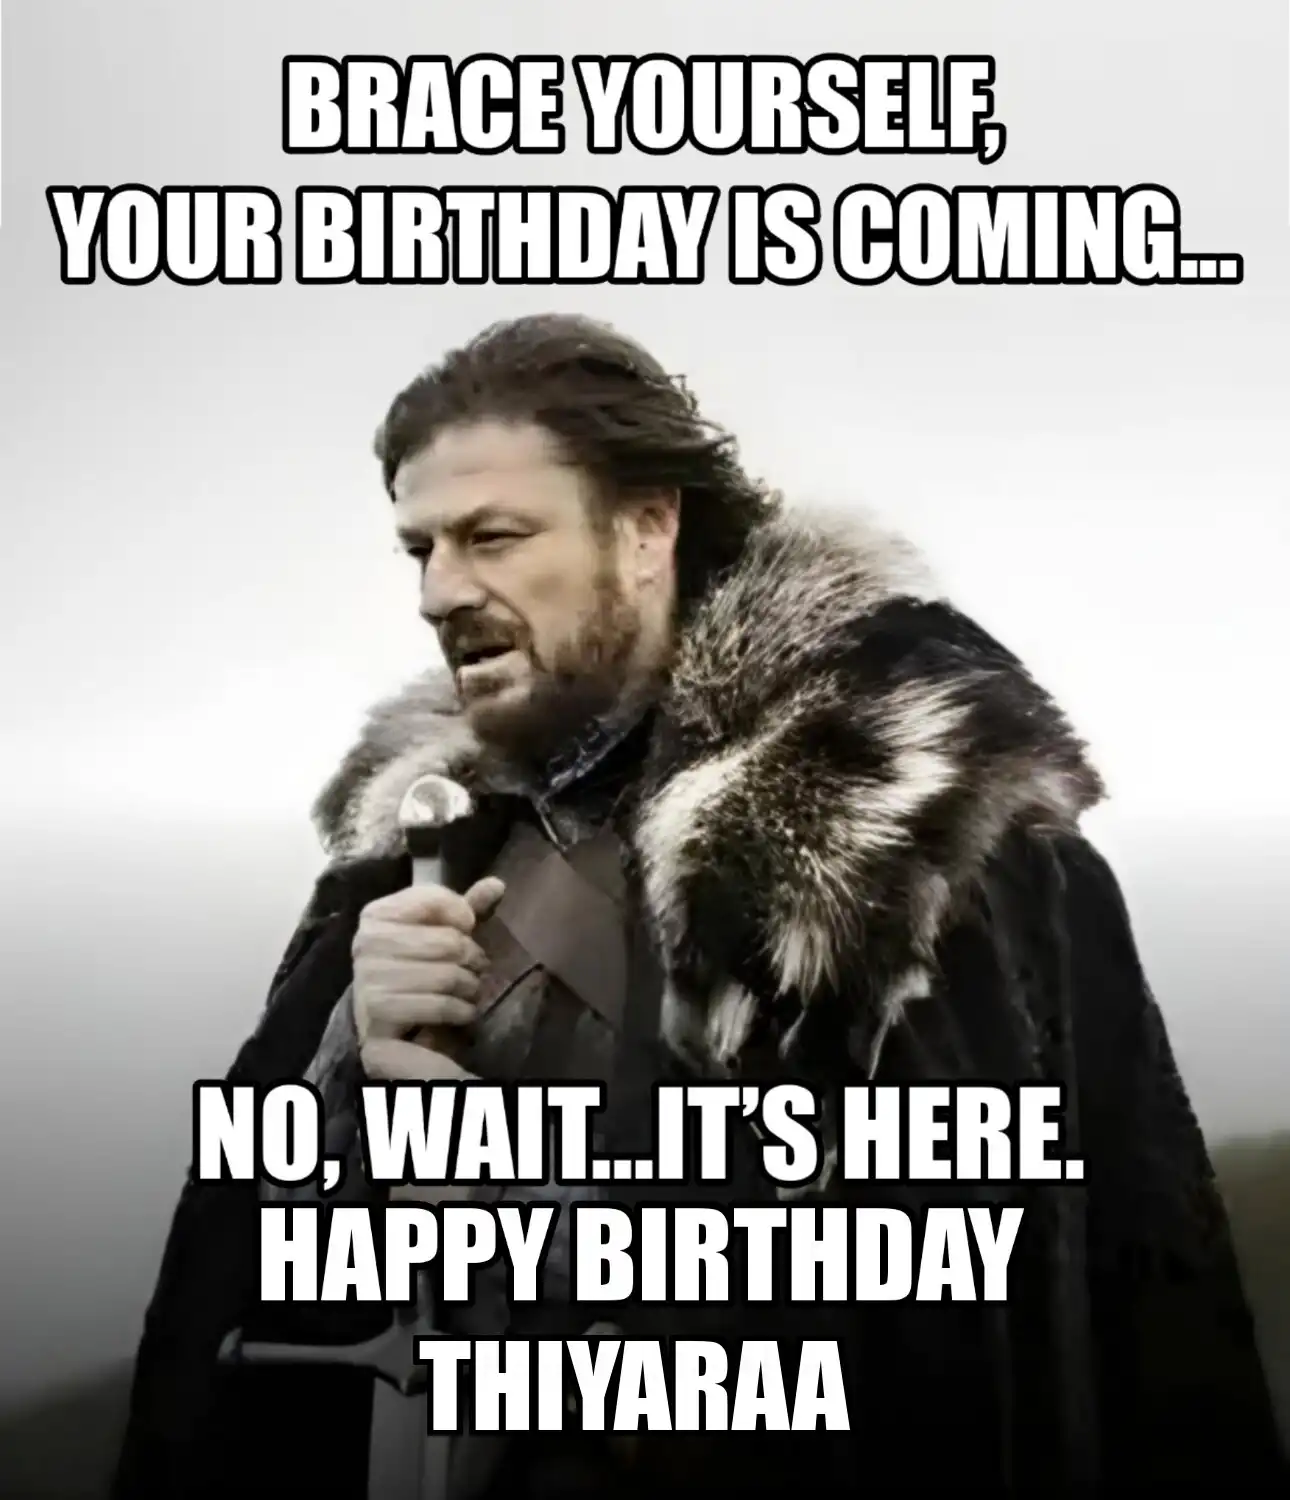 Happy Birthday Thiyaraa Brace Yourself Your Birthday Is Coming Meme